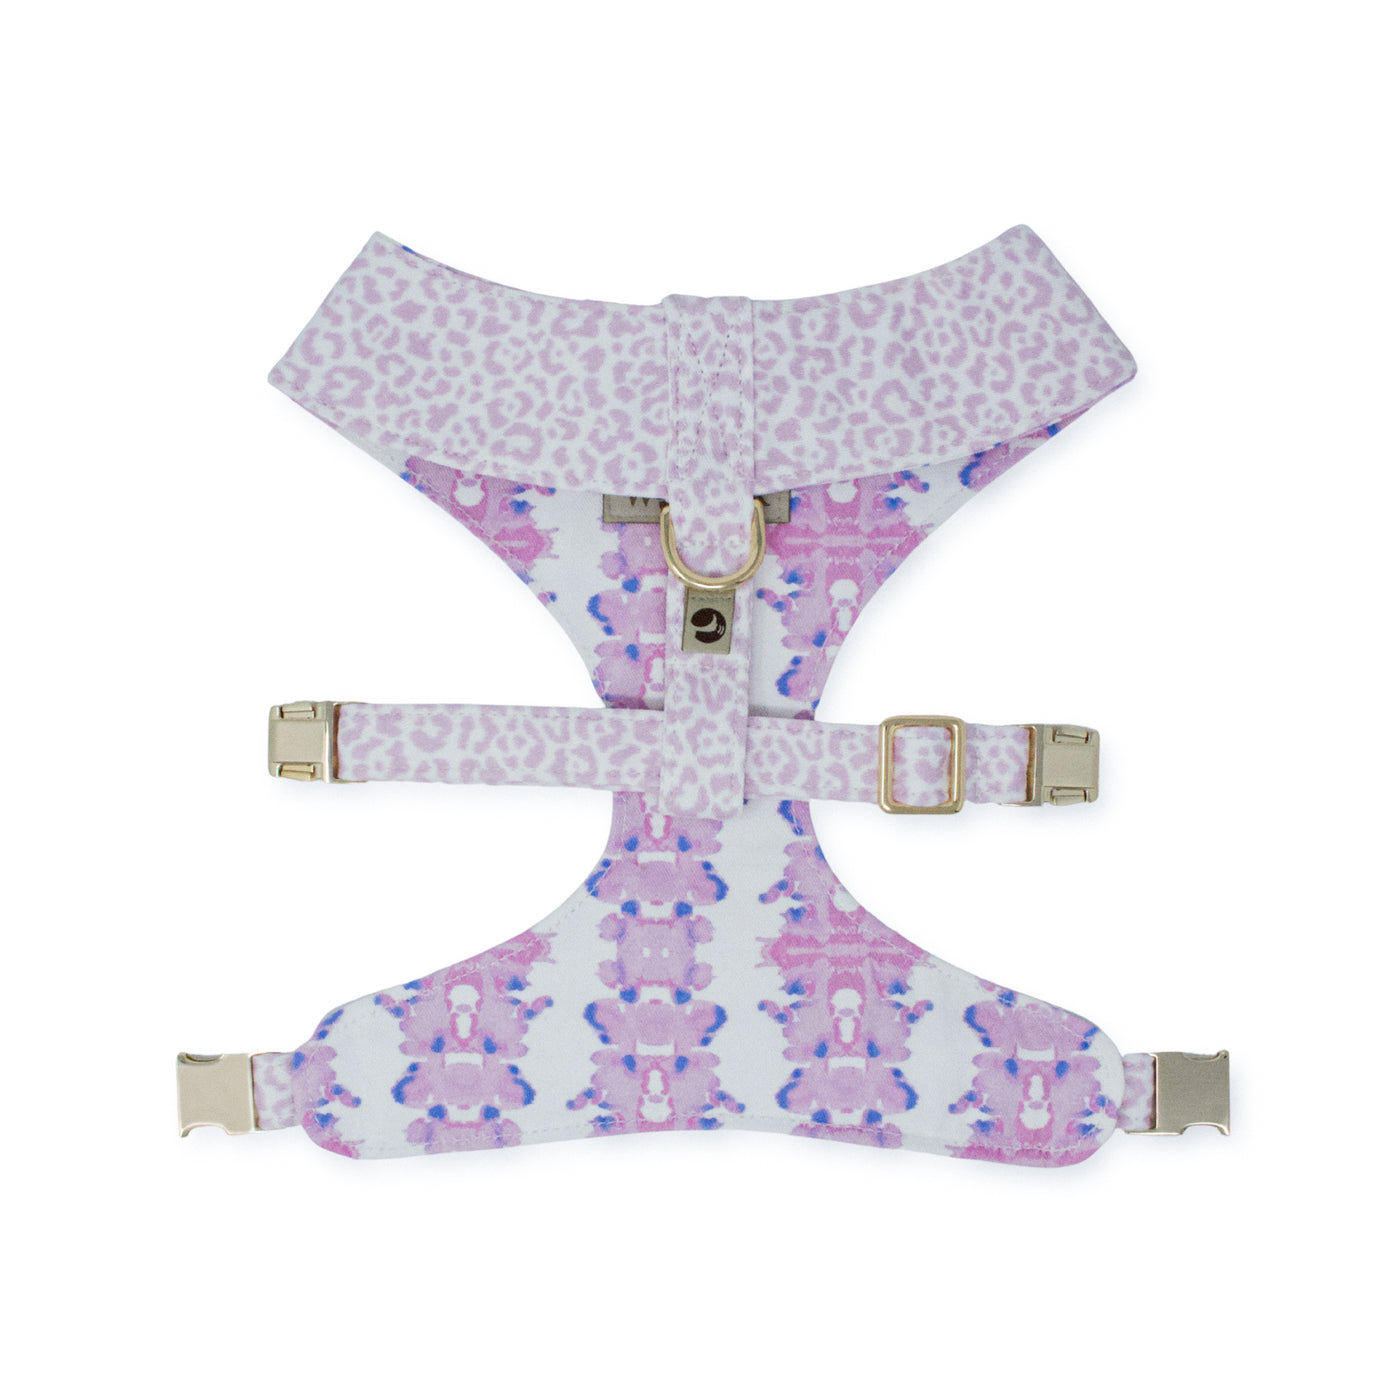 French Lavender Reversible Dog Harness + Rosette Sailor Bow